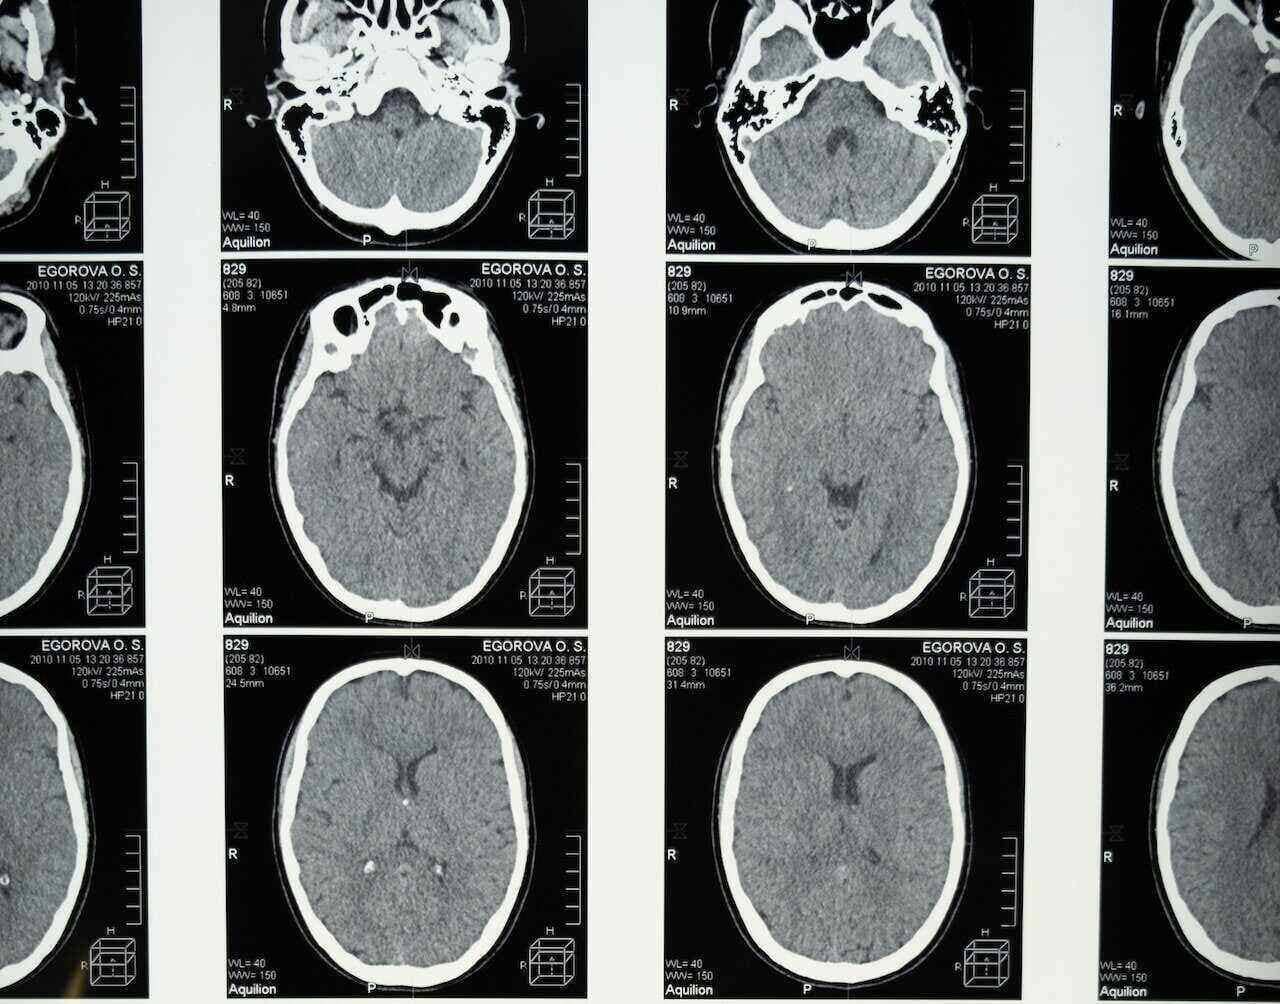 brain scans without brain tumor segmentation performed yet